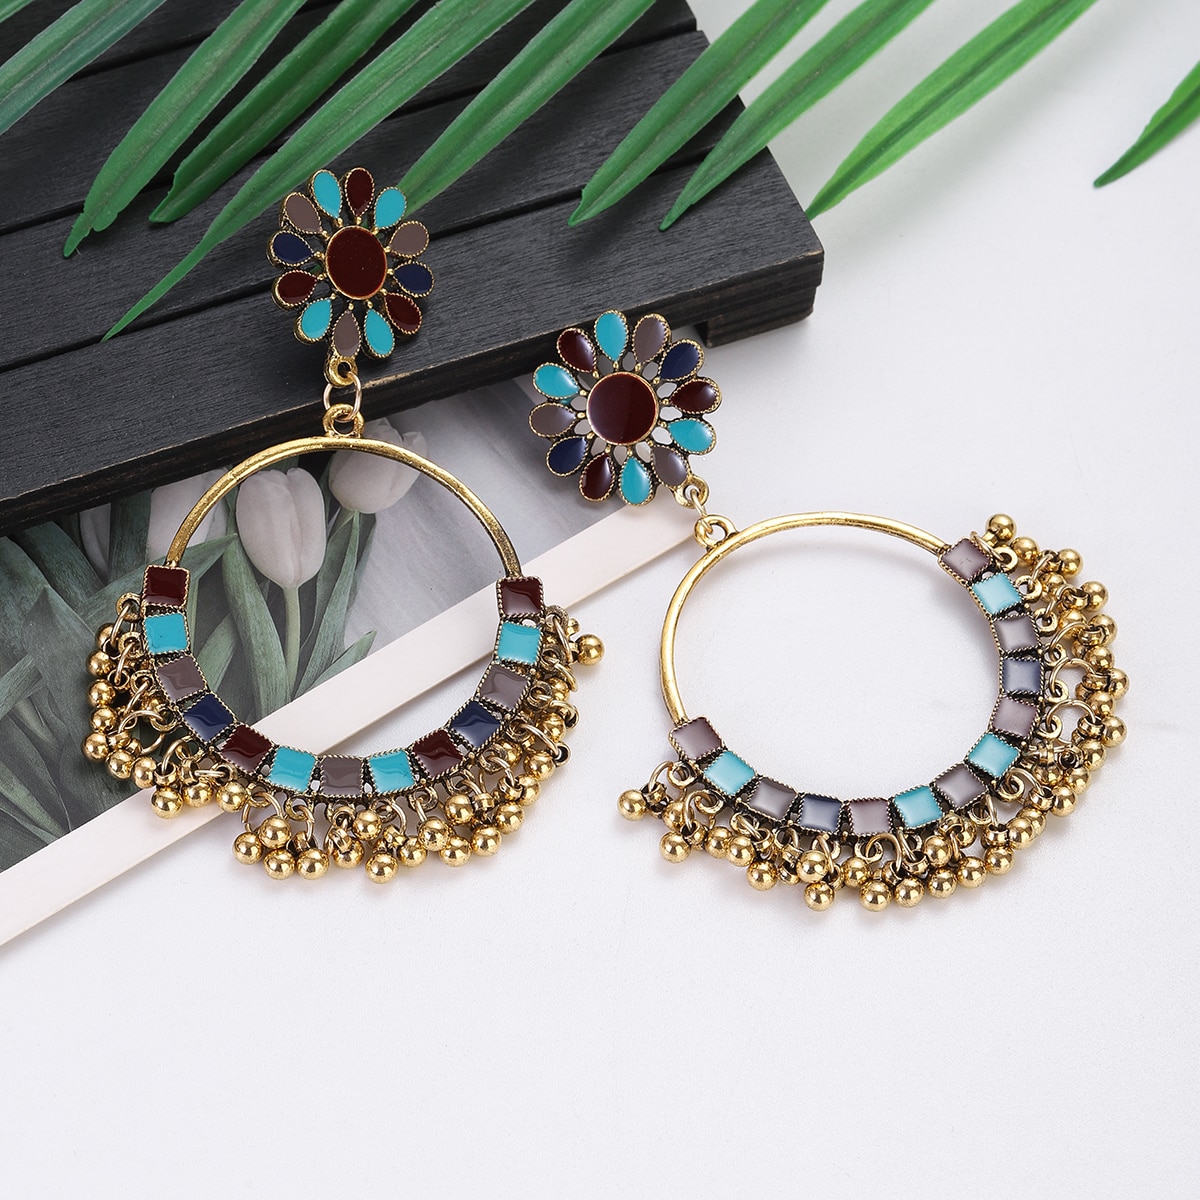 Ethnic-Vintage-Big-Round-Dangle-Earrings-for-Women-Boho-Green-Flower-Beads-Tassel-Earrings-Party-Jew-1005005057264367-4